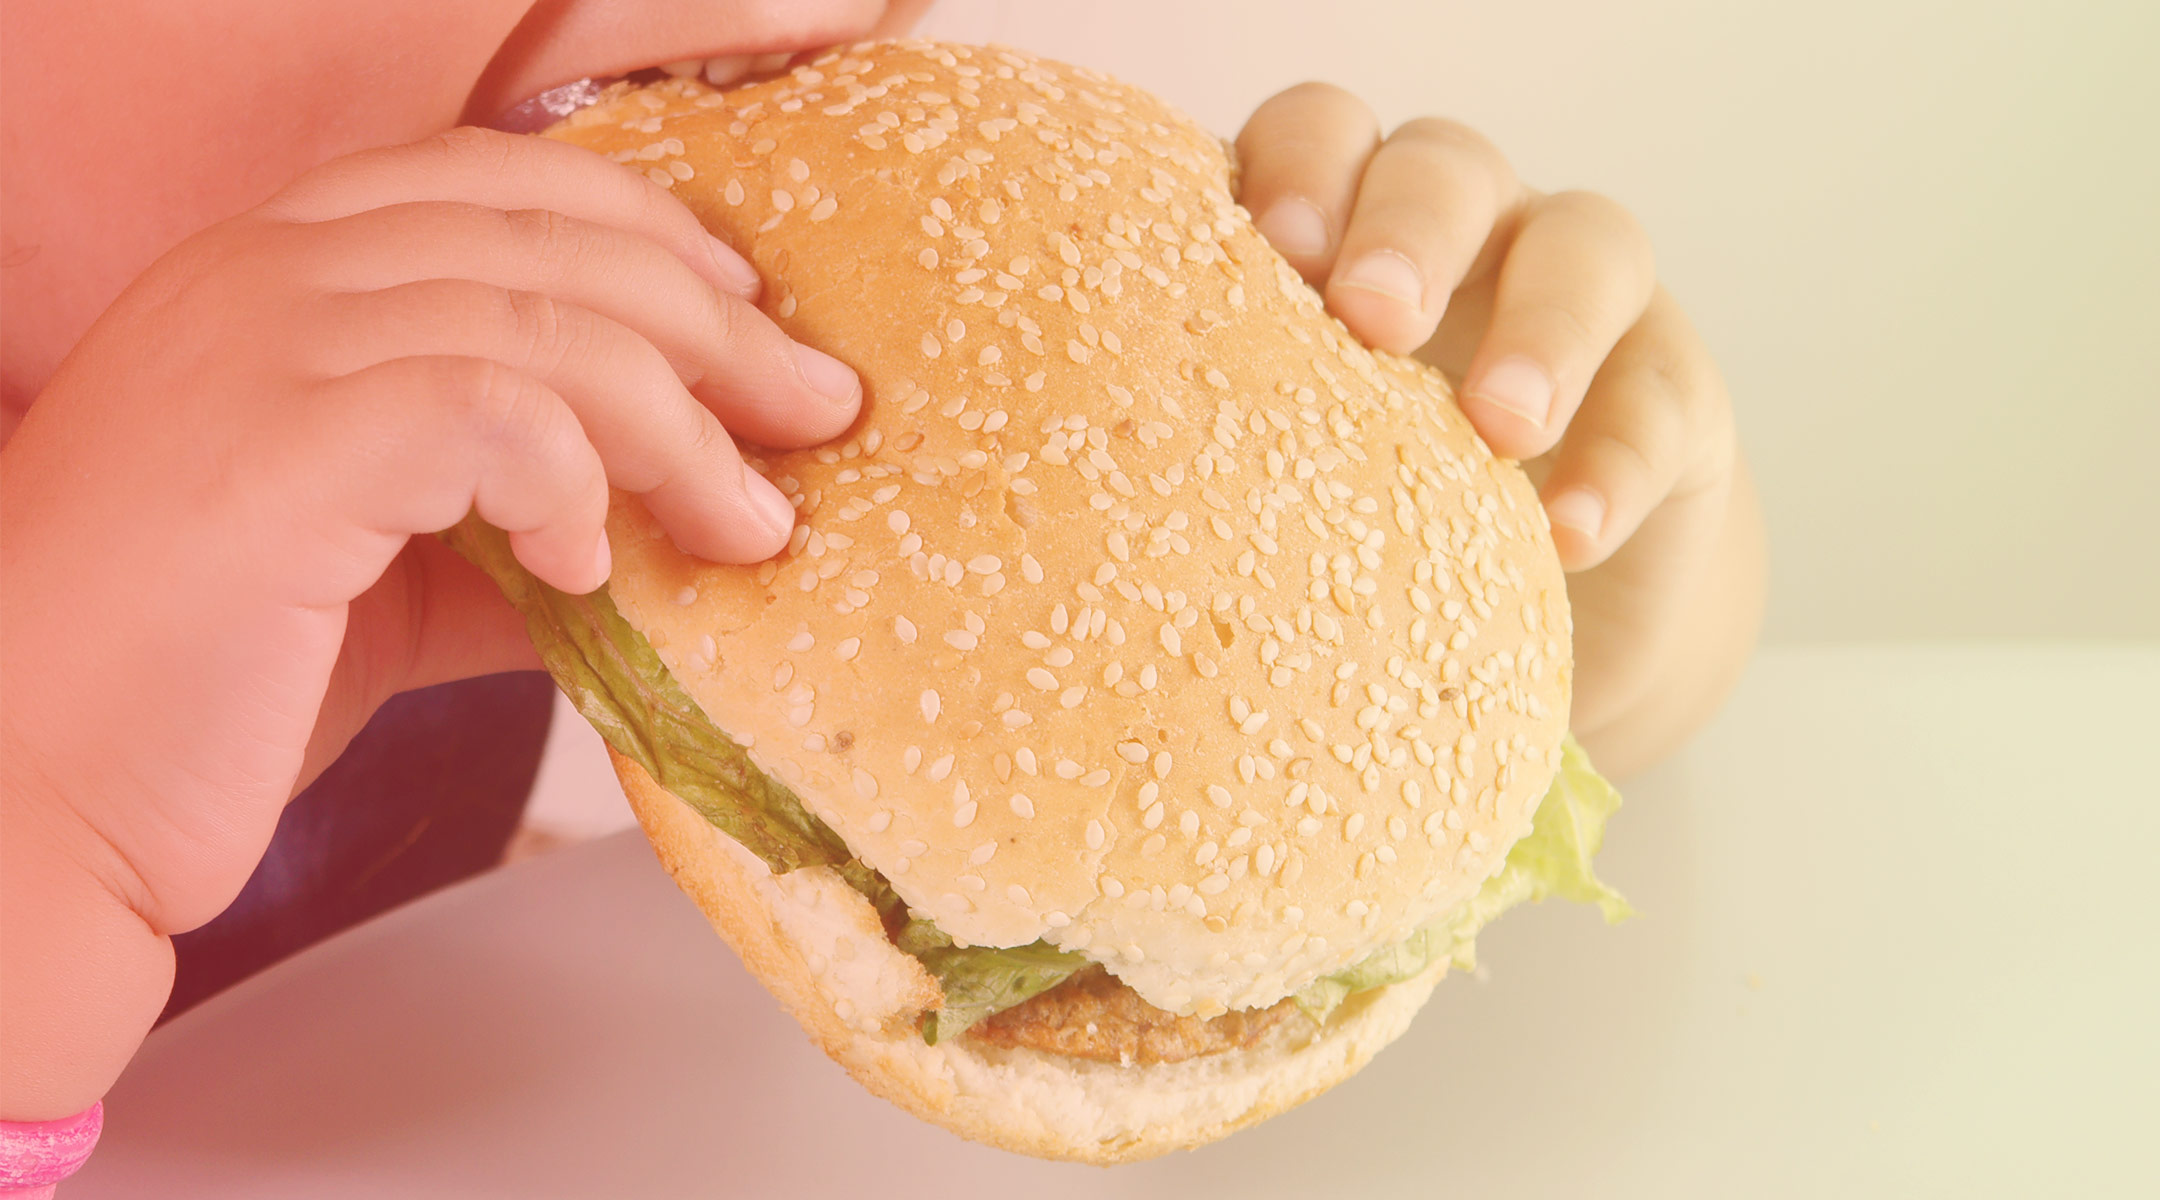 child eating fast food hamburger